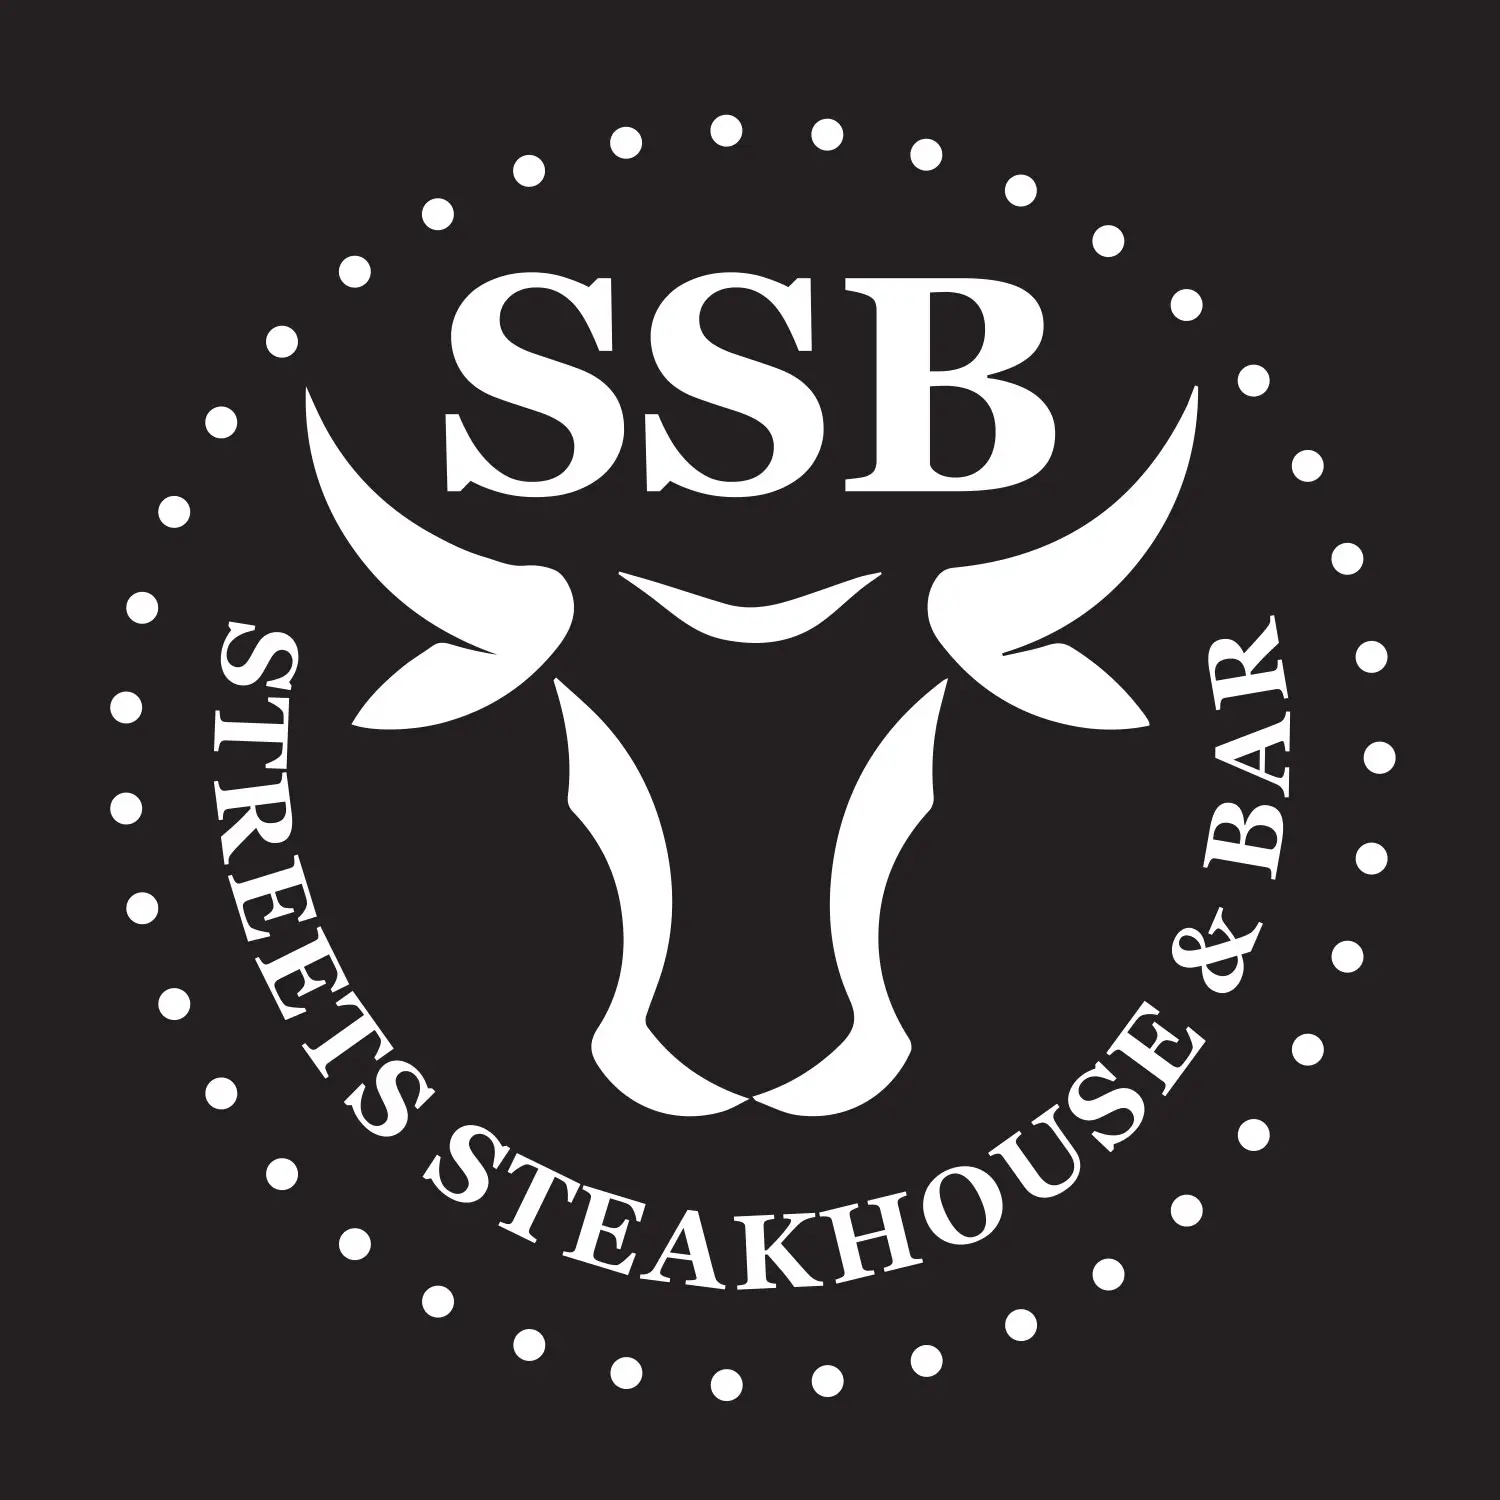 Streets Steakhouse & Bar